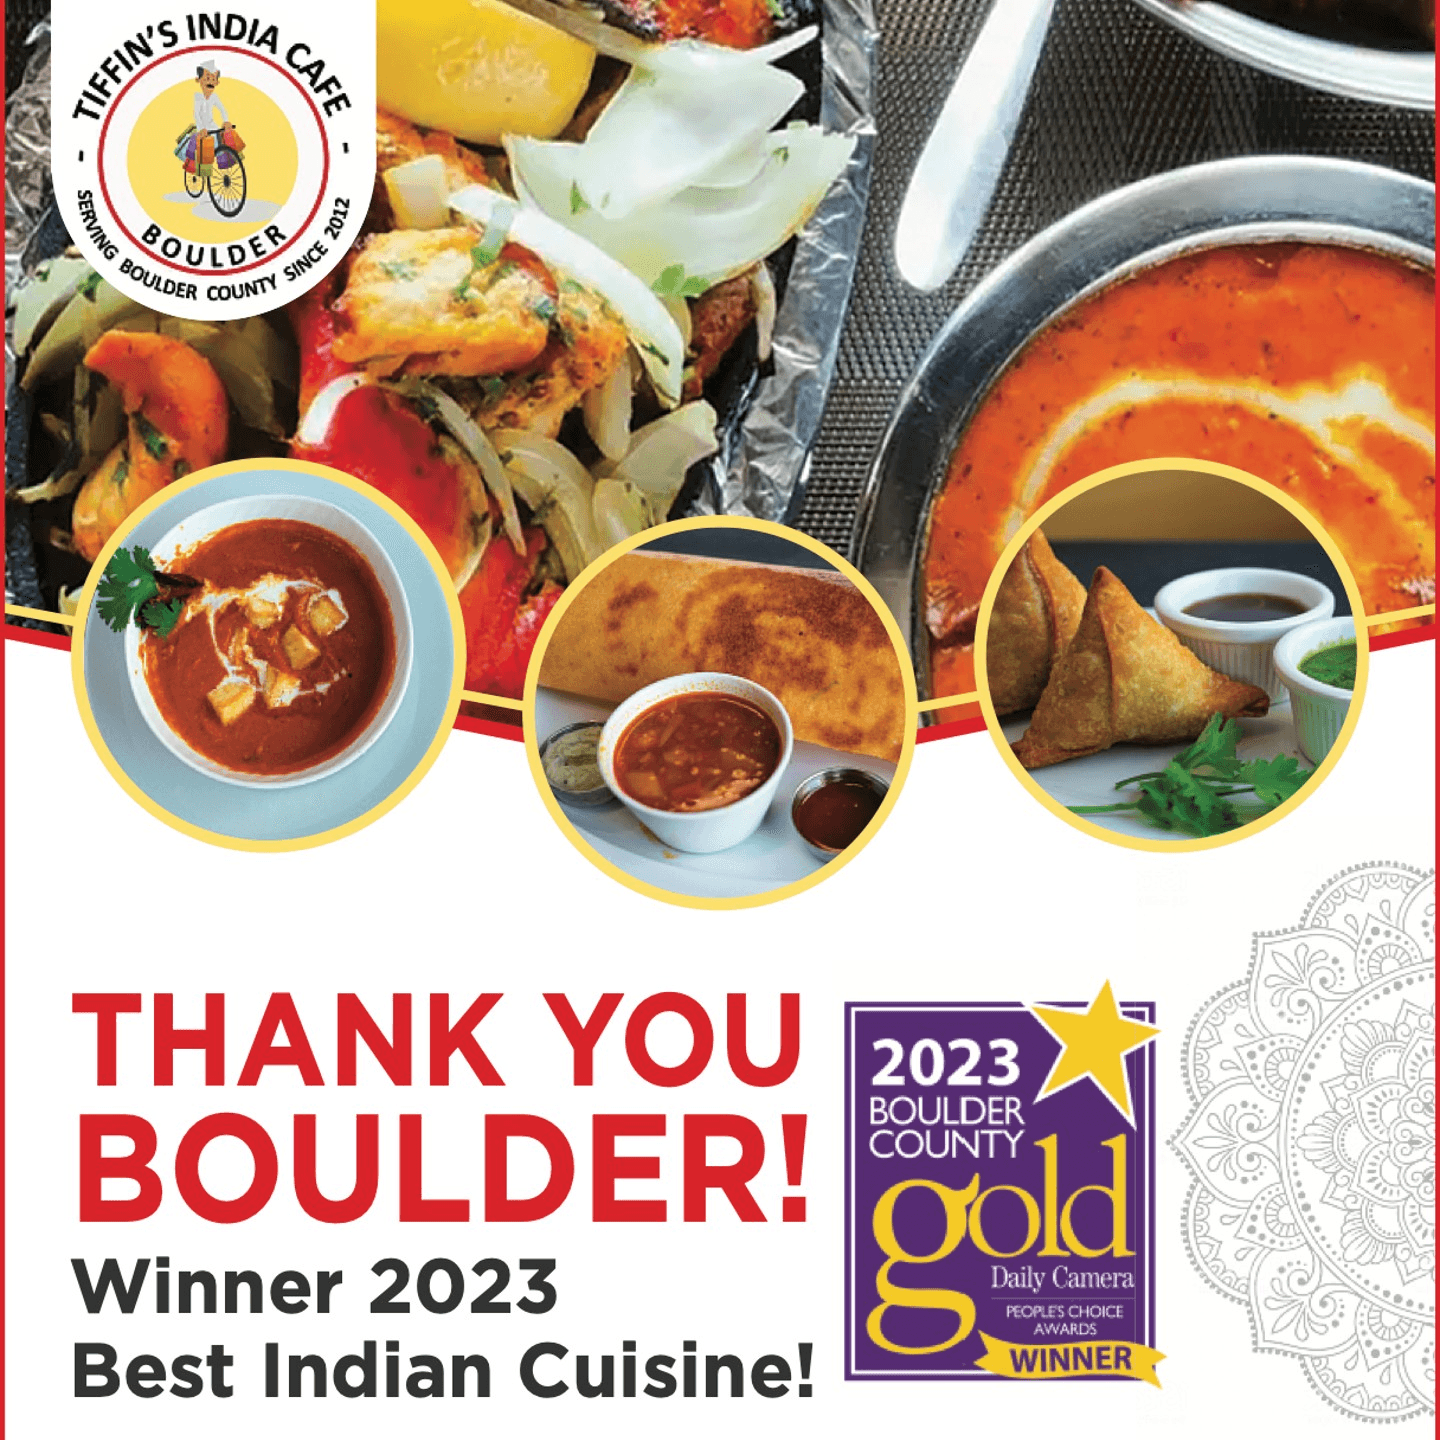 Voted Best Indian Cuisine 2023 in Boulder!